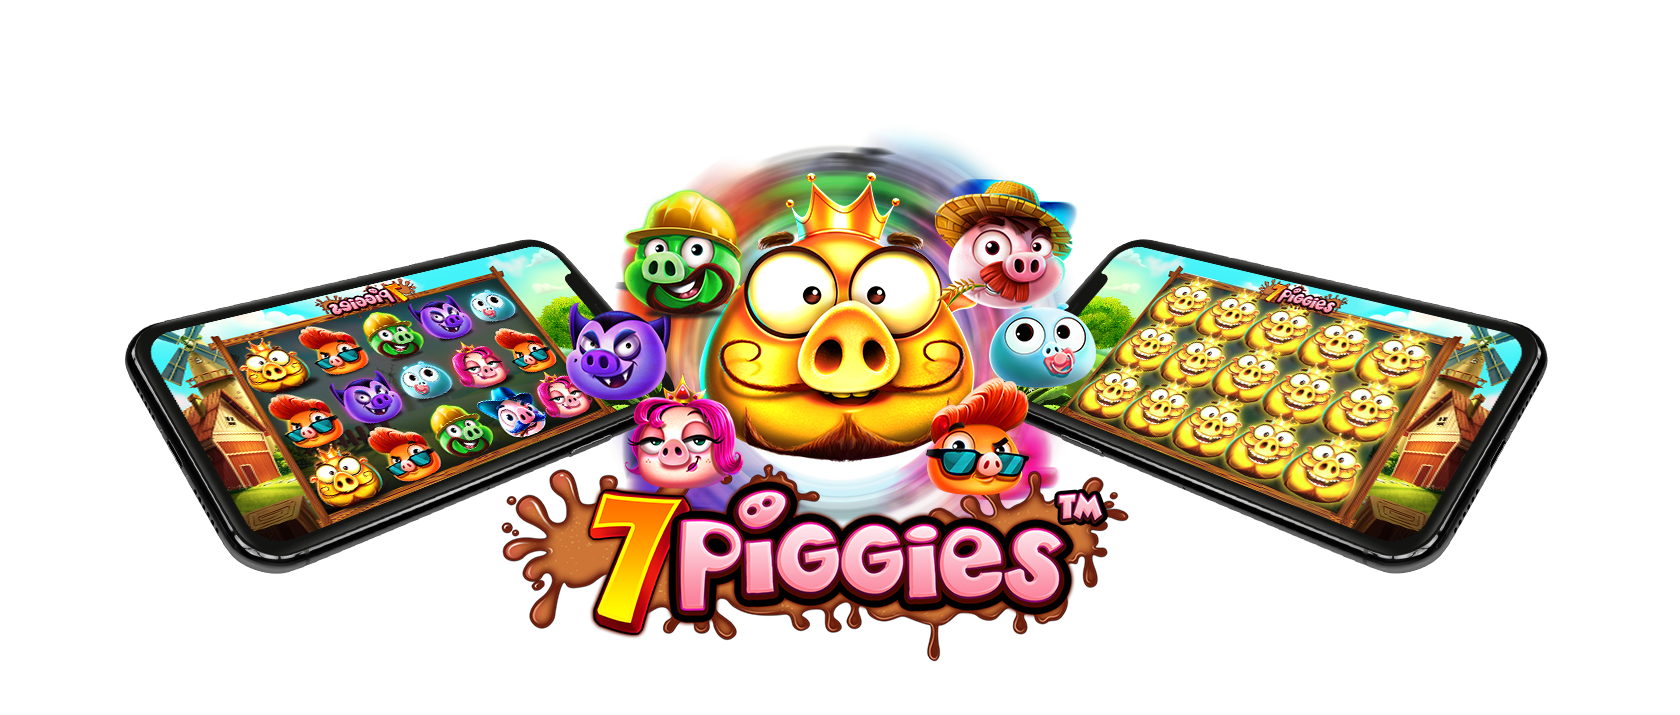 7 piggies slots game logo